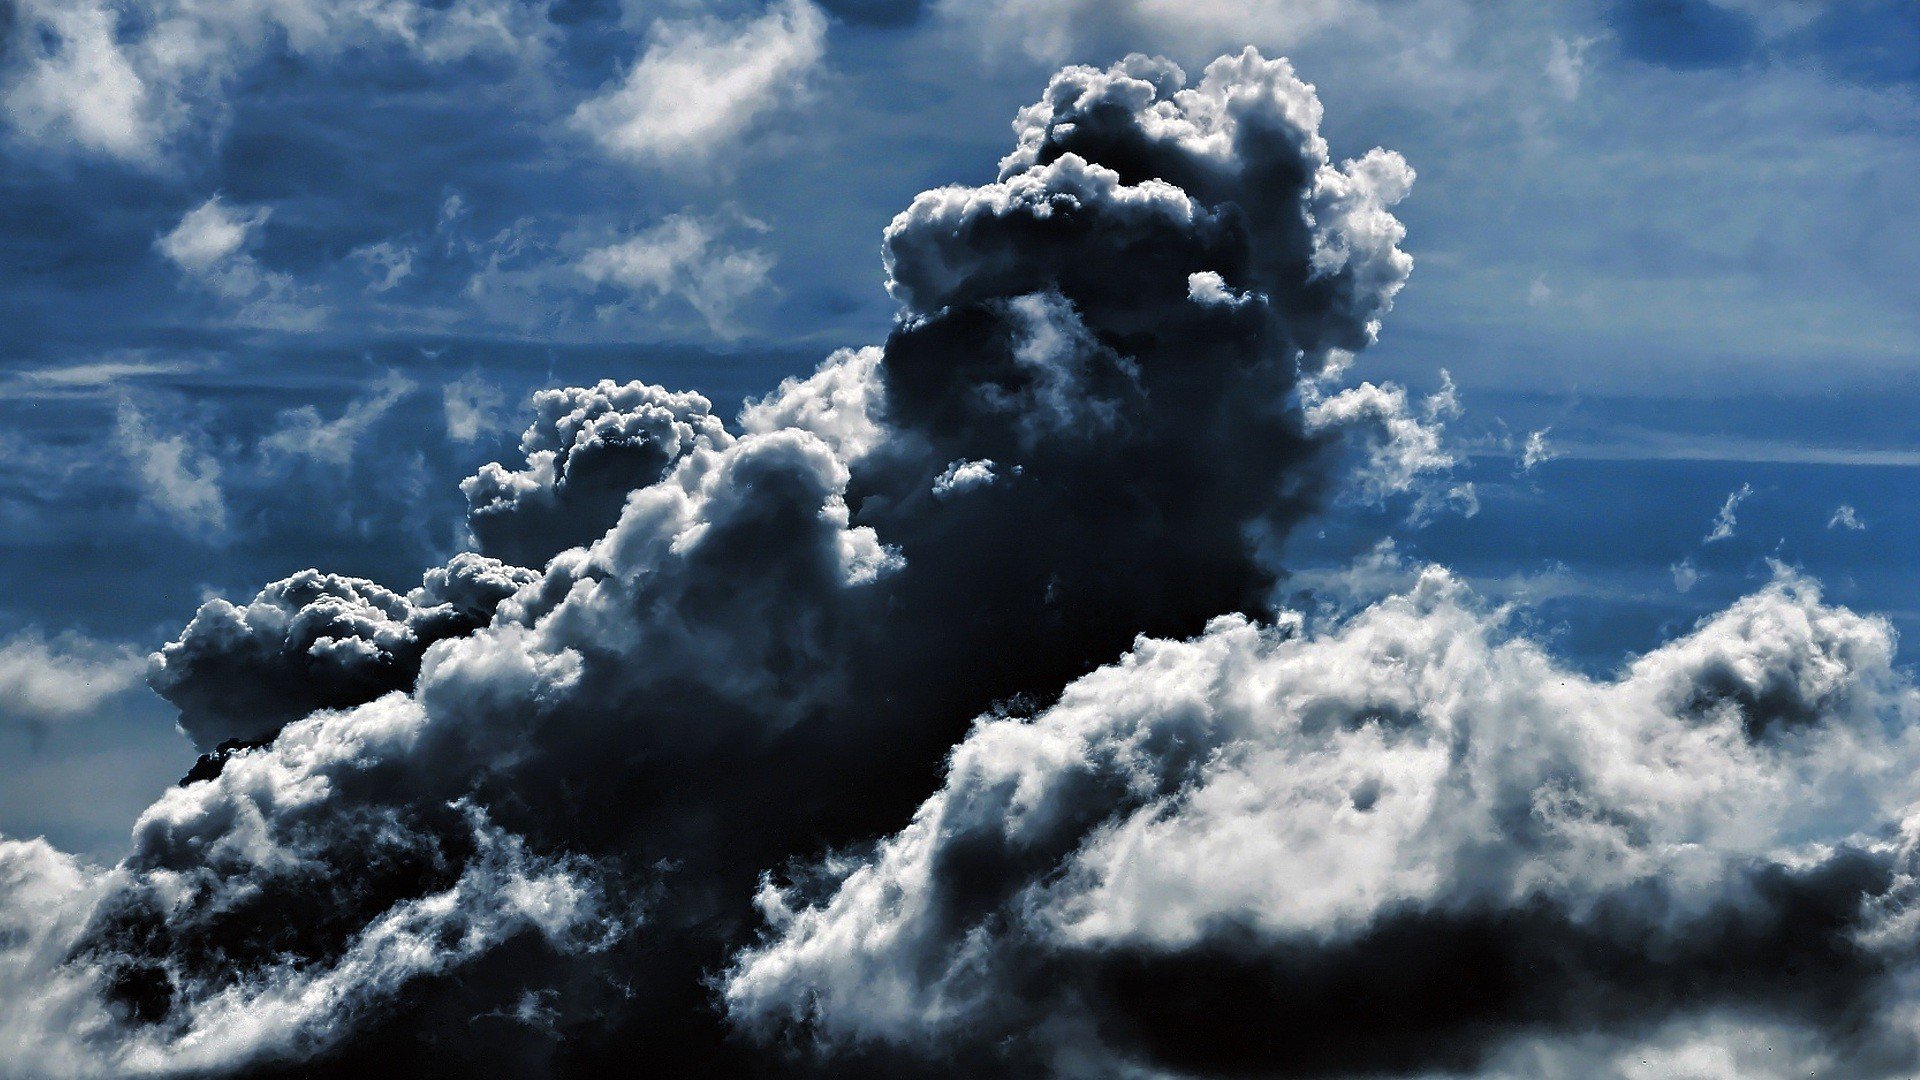 Storm clouds wallpaper 6027 1920x1080